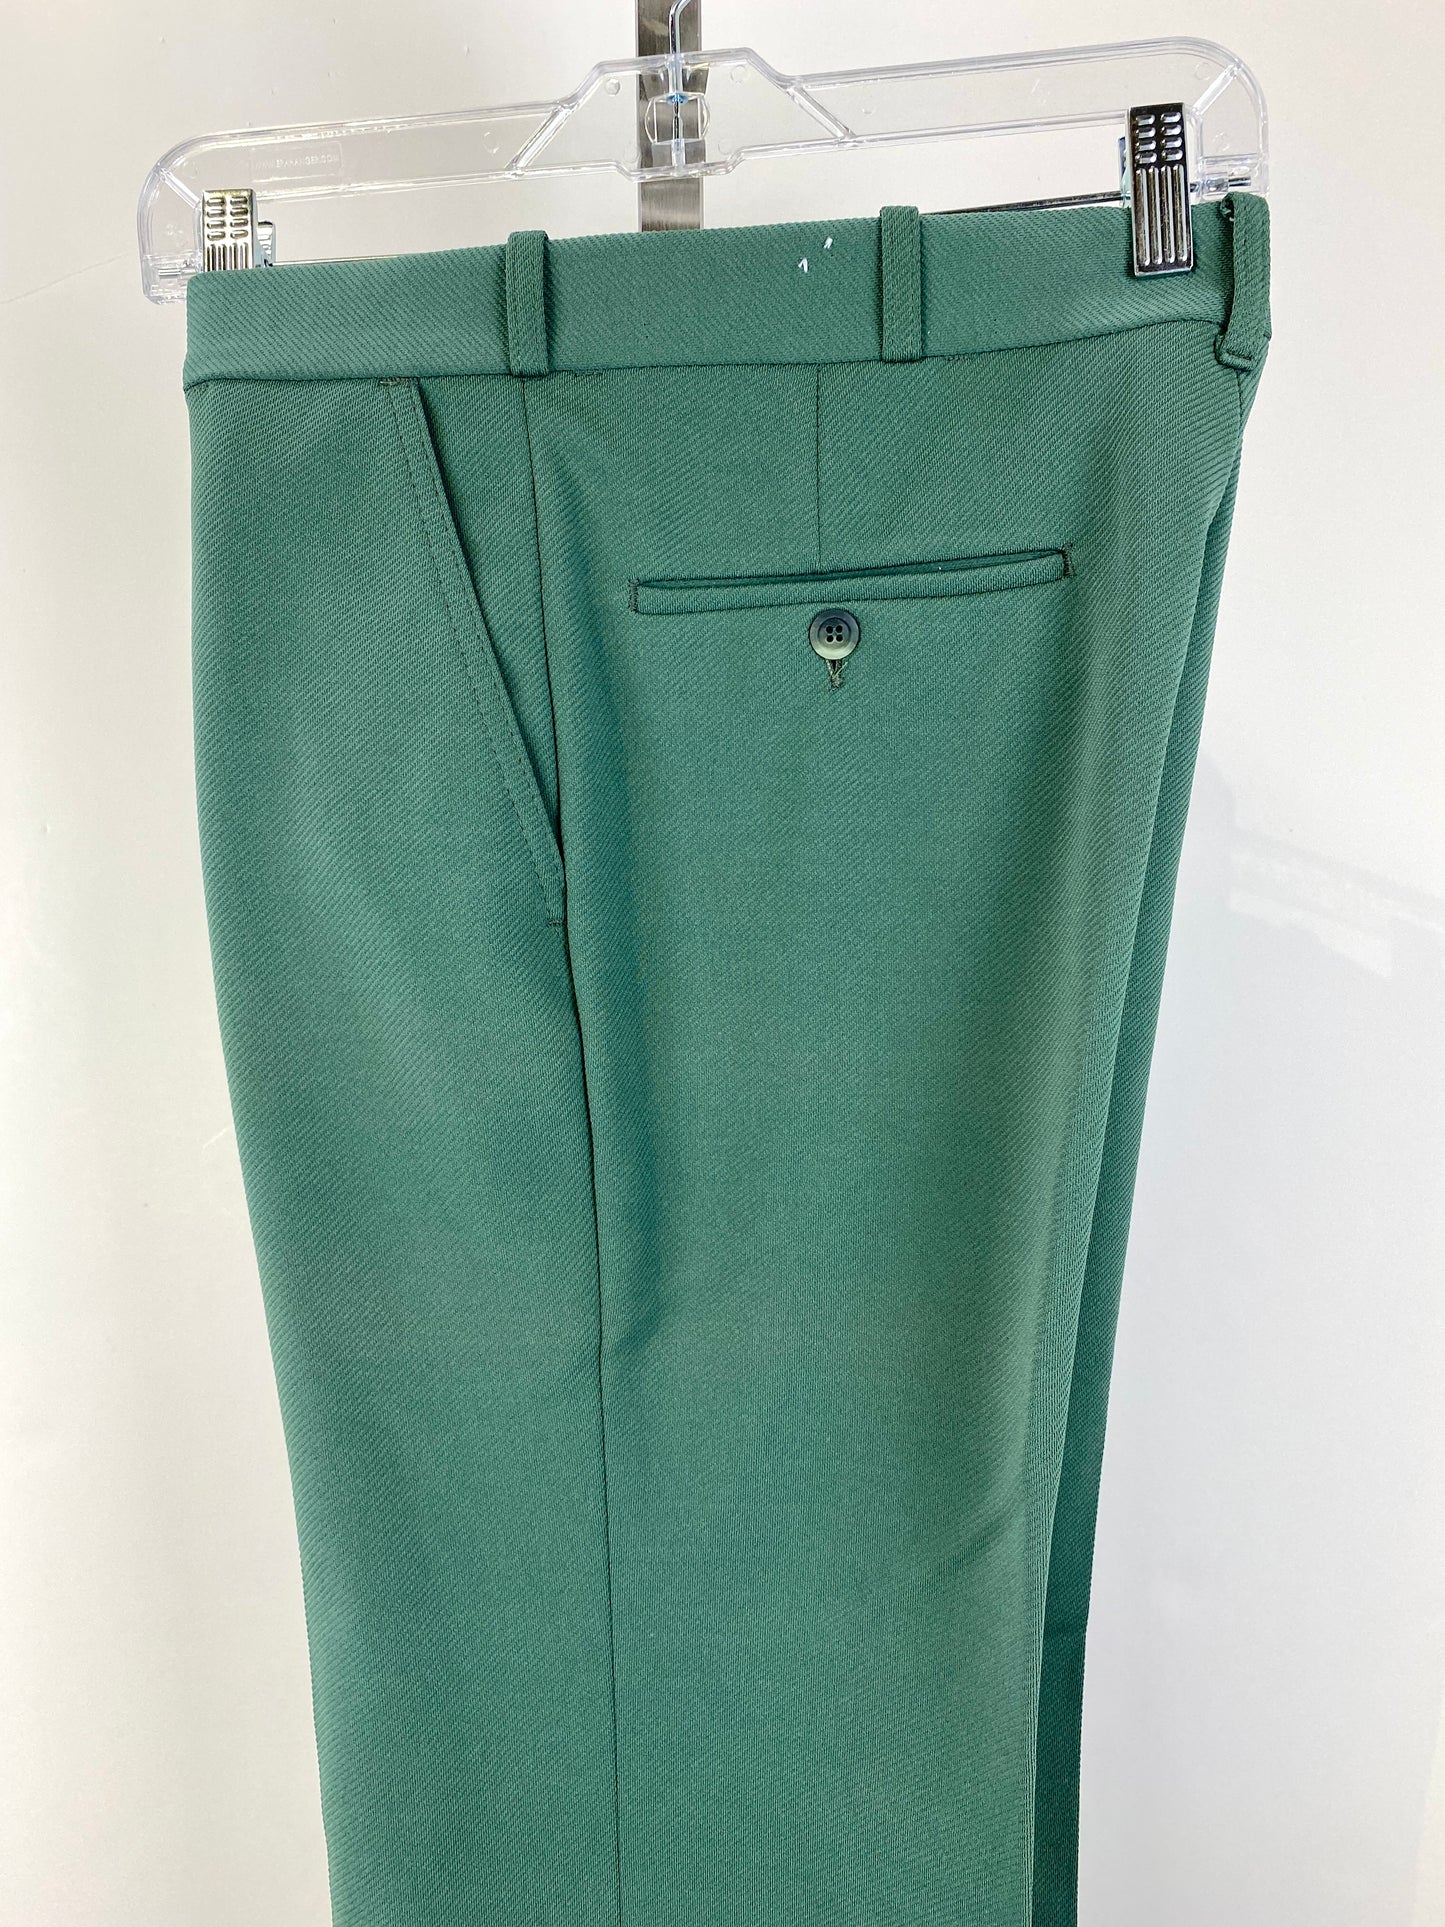 Vintage 1970s Deadstock Lee Polyester Flared Trousers, Men's Green Slacks, NOS